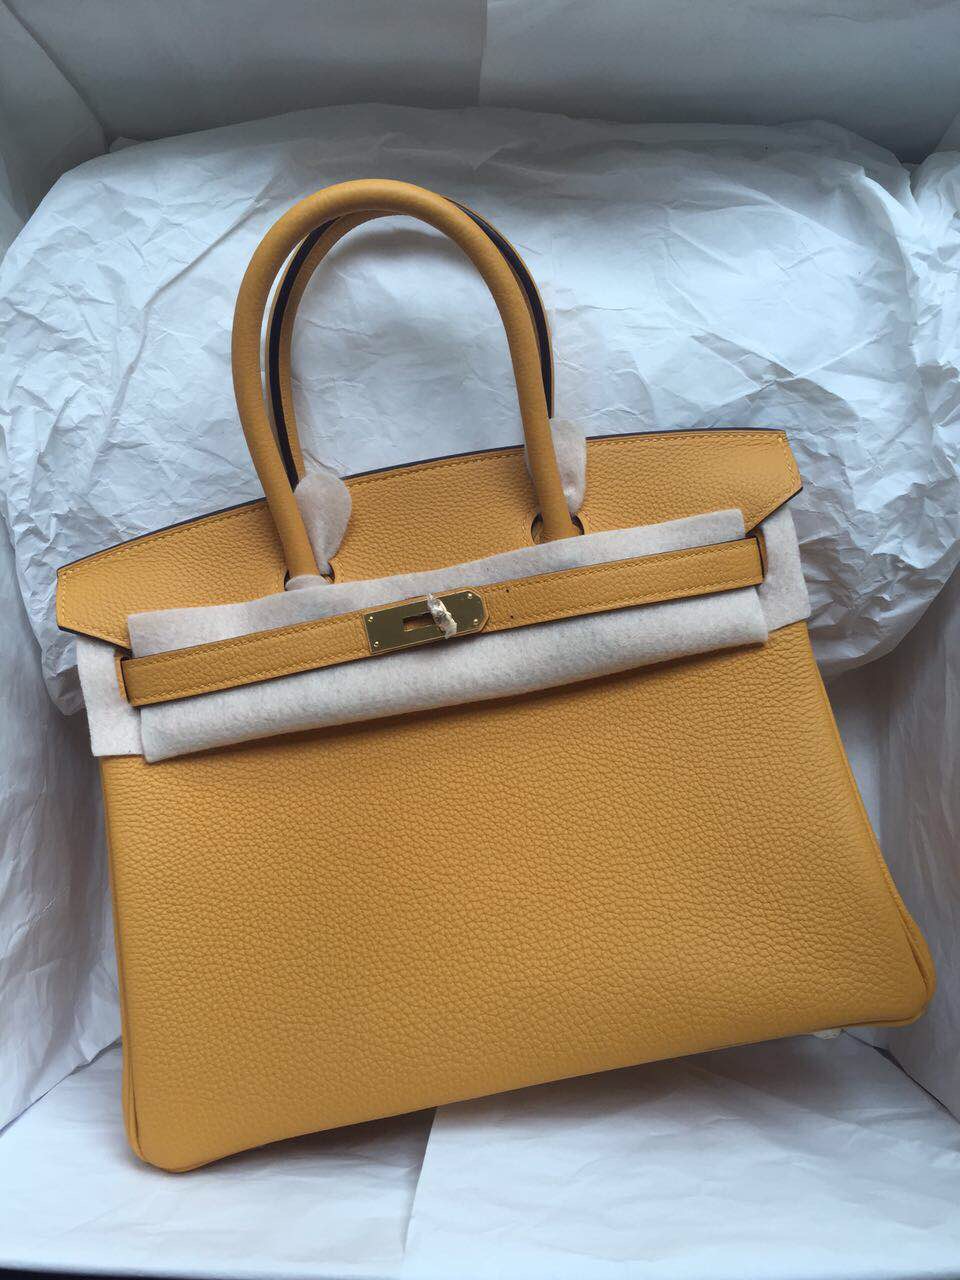 Discount Hermes Birkin Bag Mustard Yellow Togo Leather Tote ...  